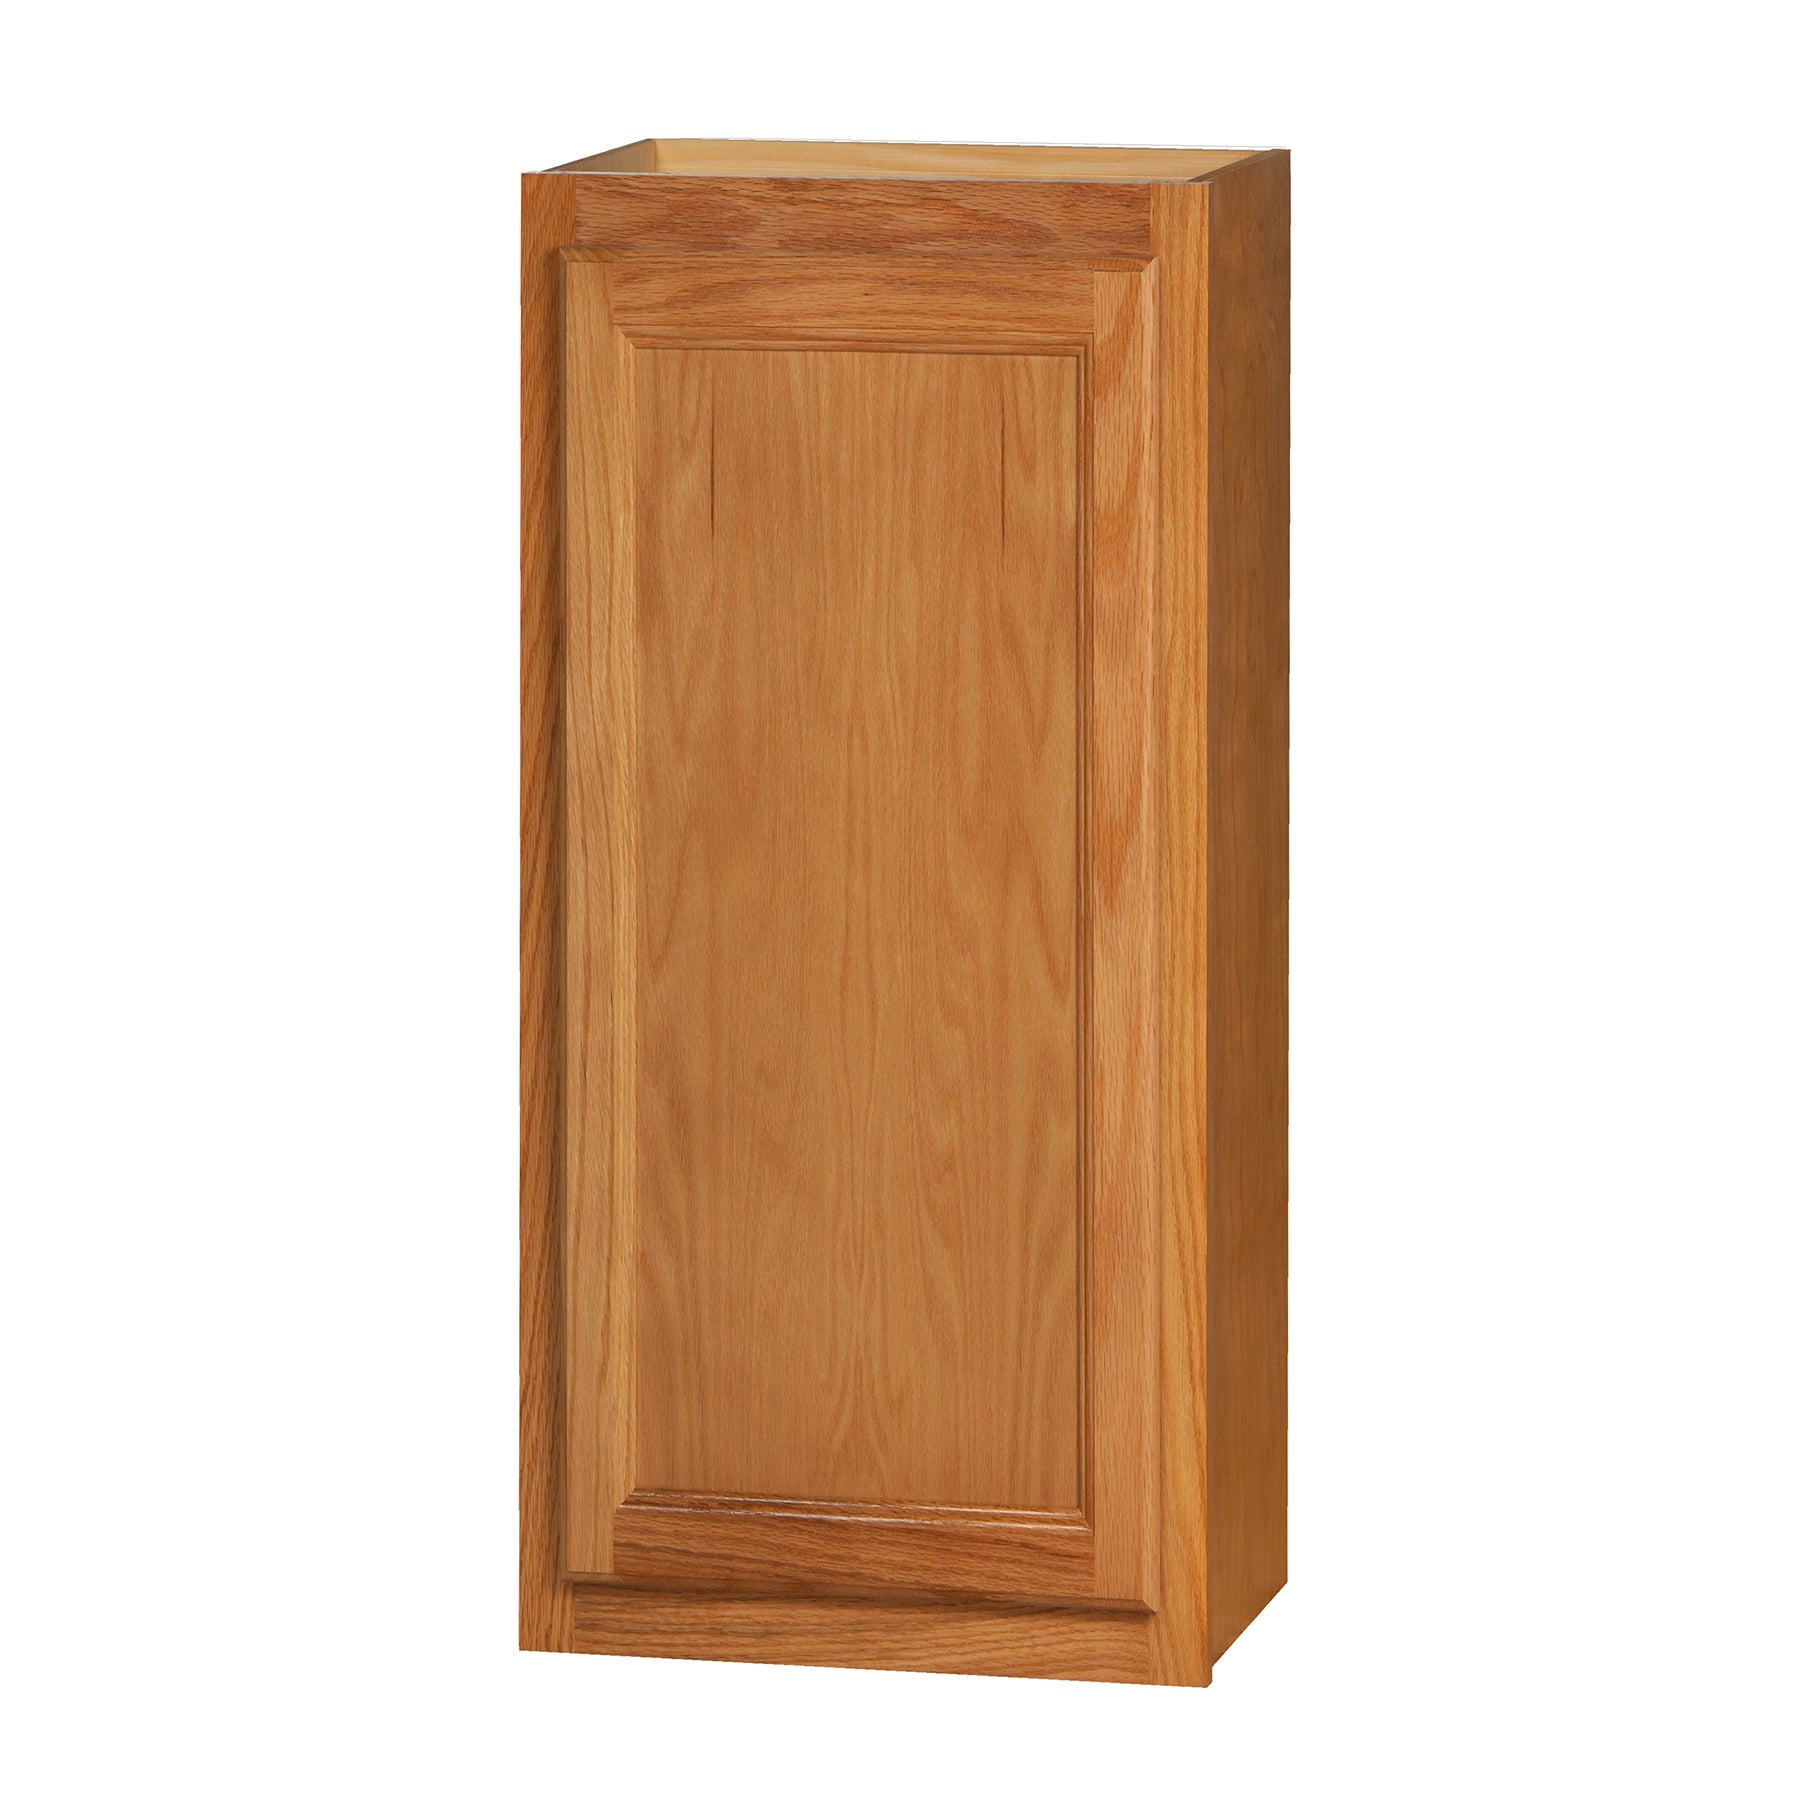 30 inch Wall Cabinets - Single Door - Chadwood Shaker - 15 Inch W x 30 Inch H x 12 Inch D